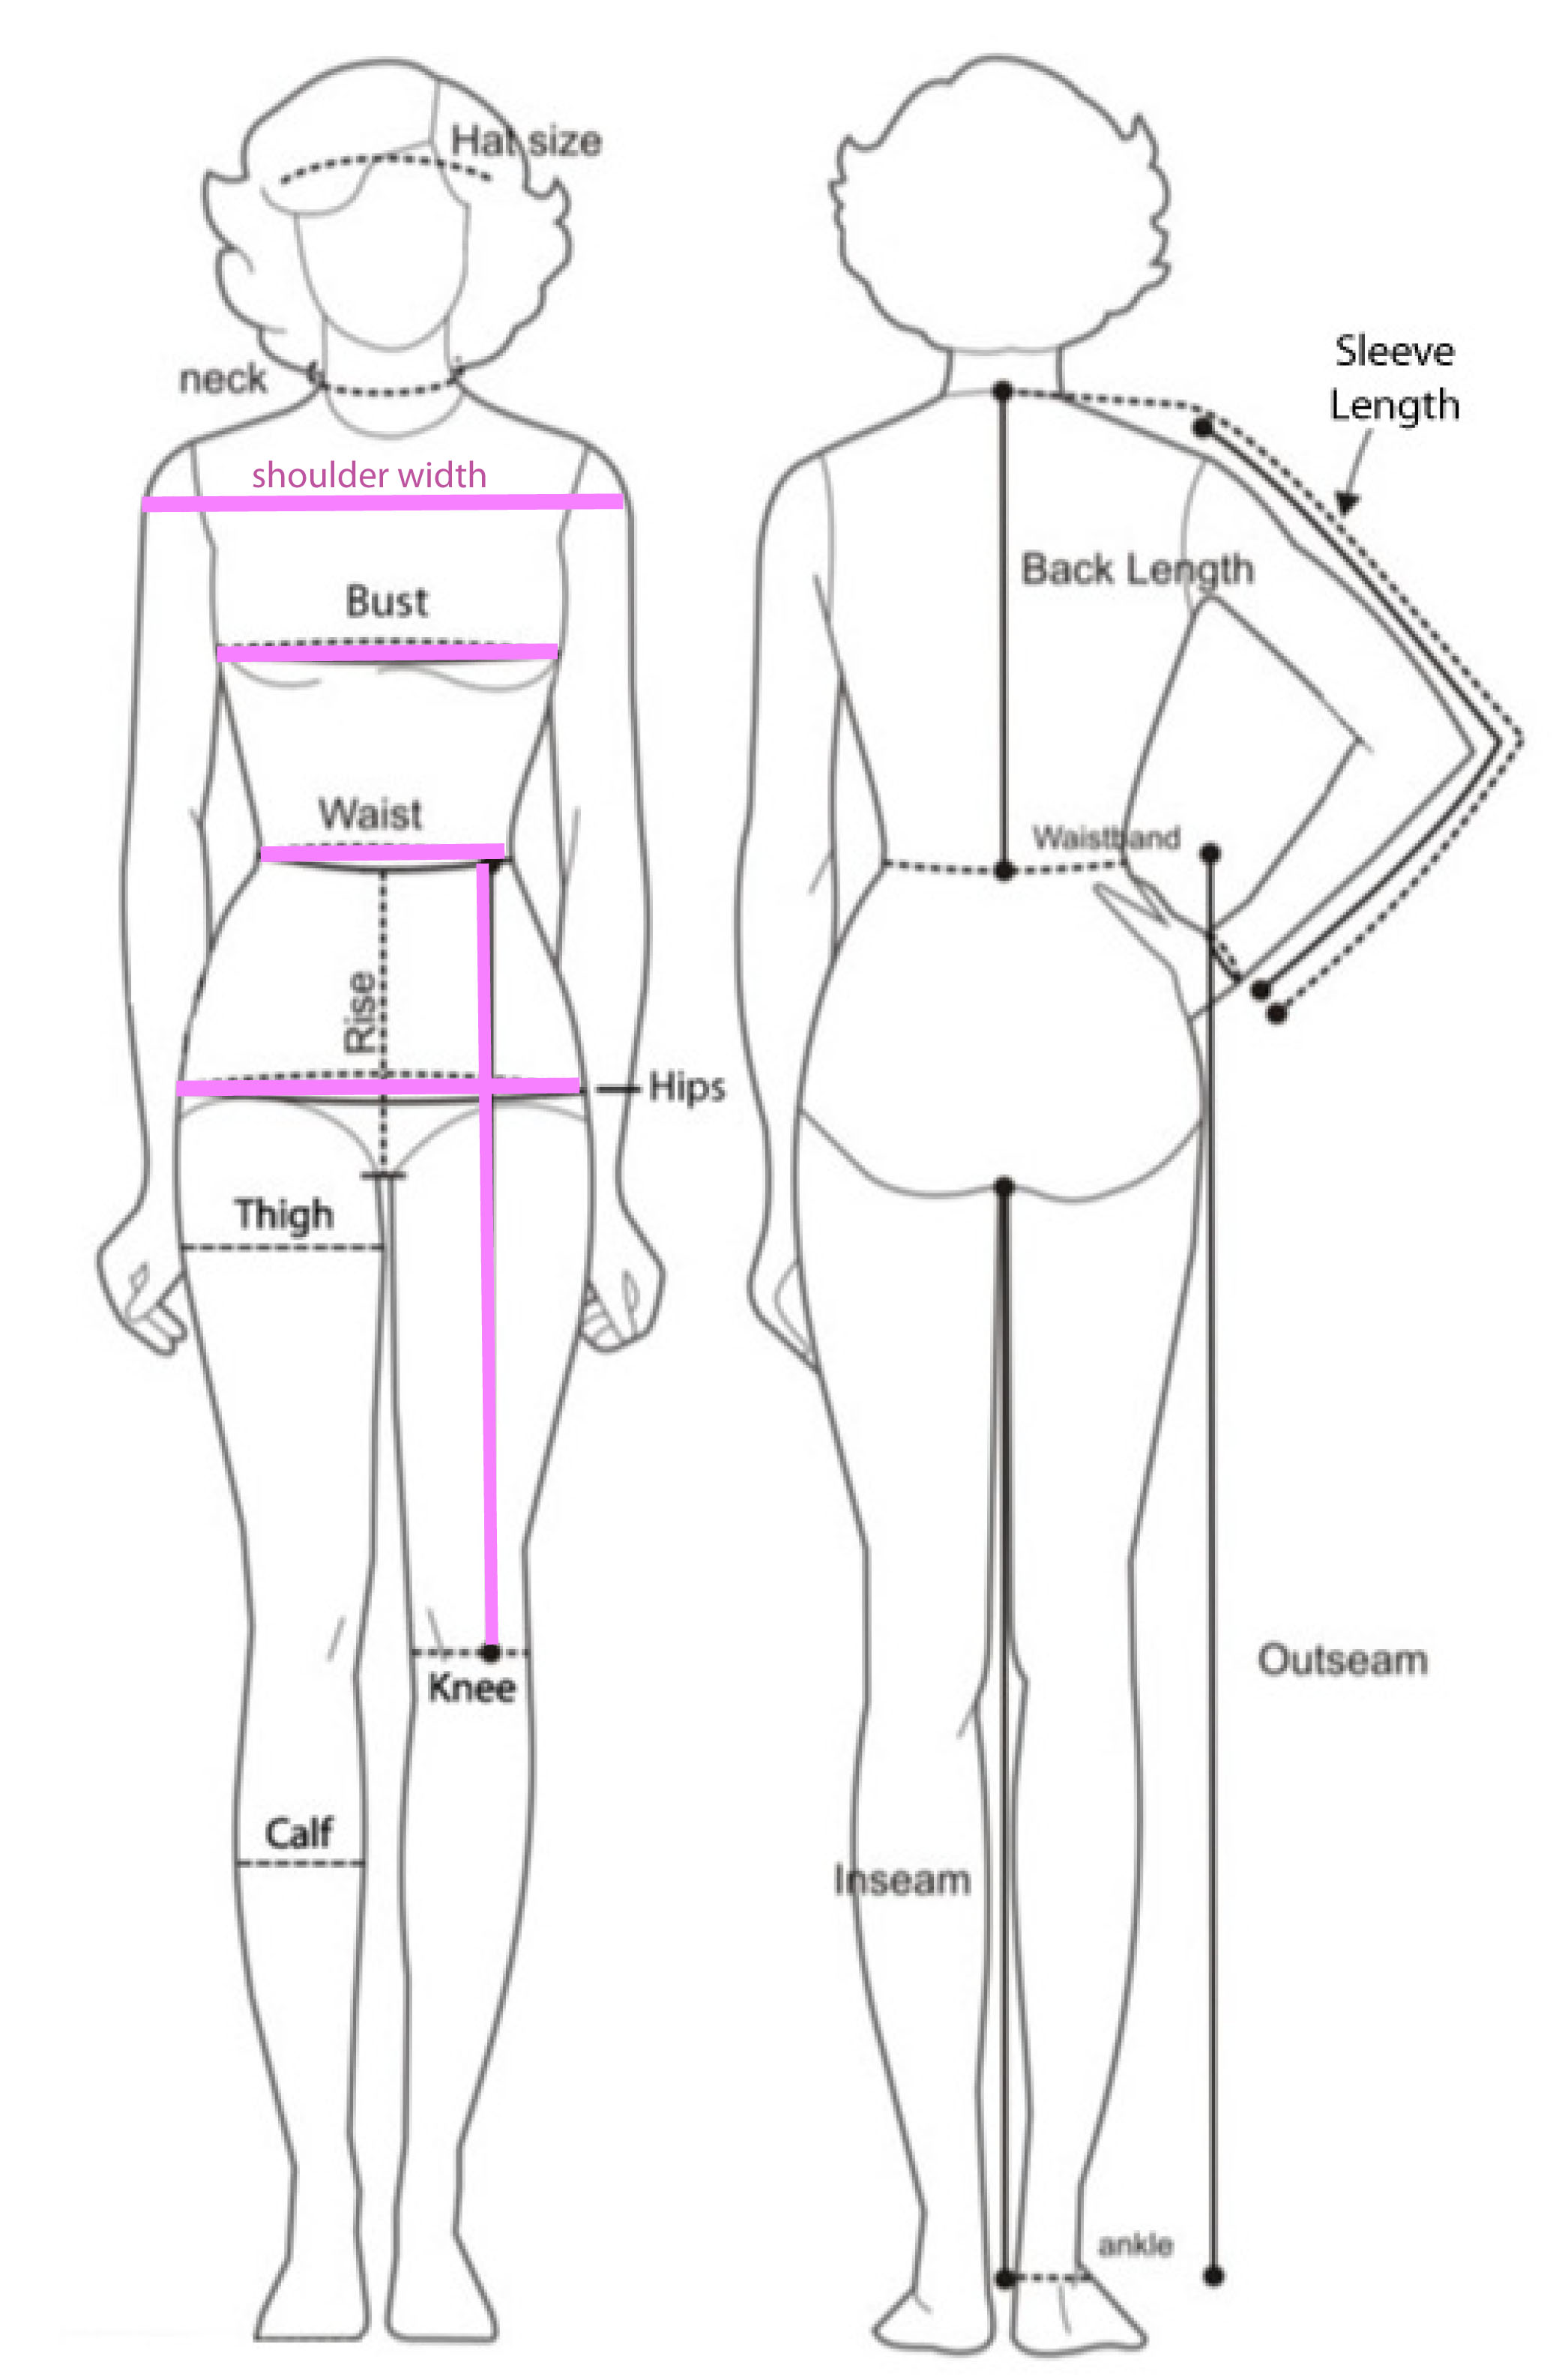 Body Measurement Chart Female